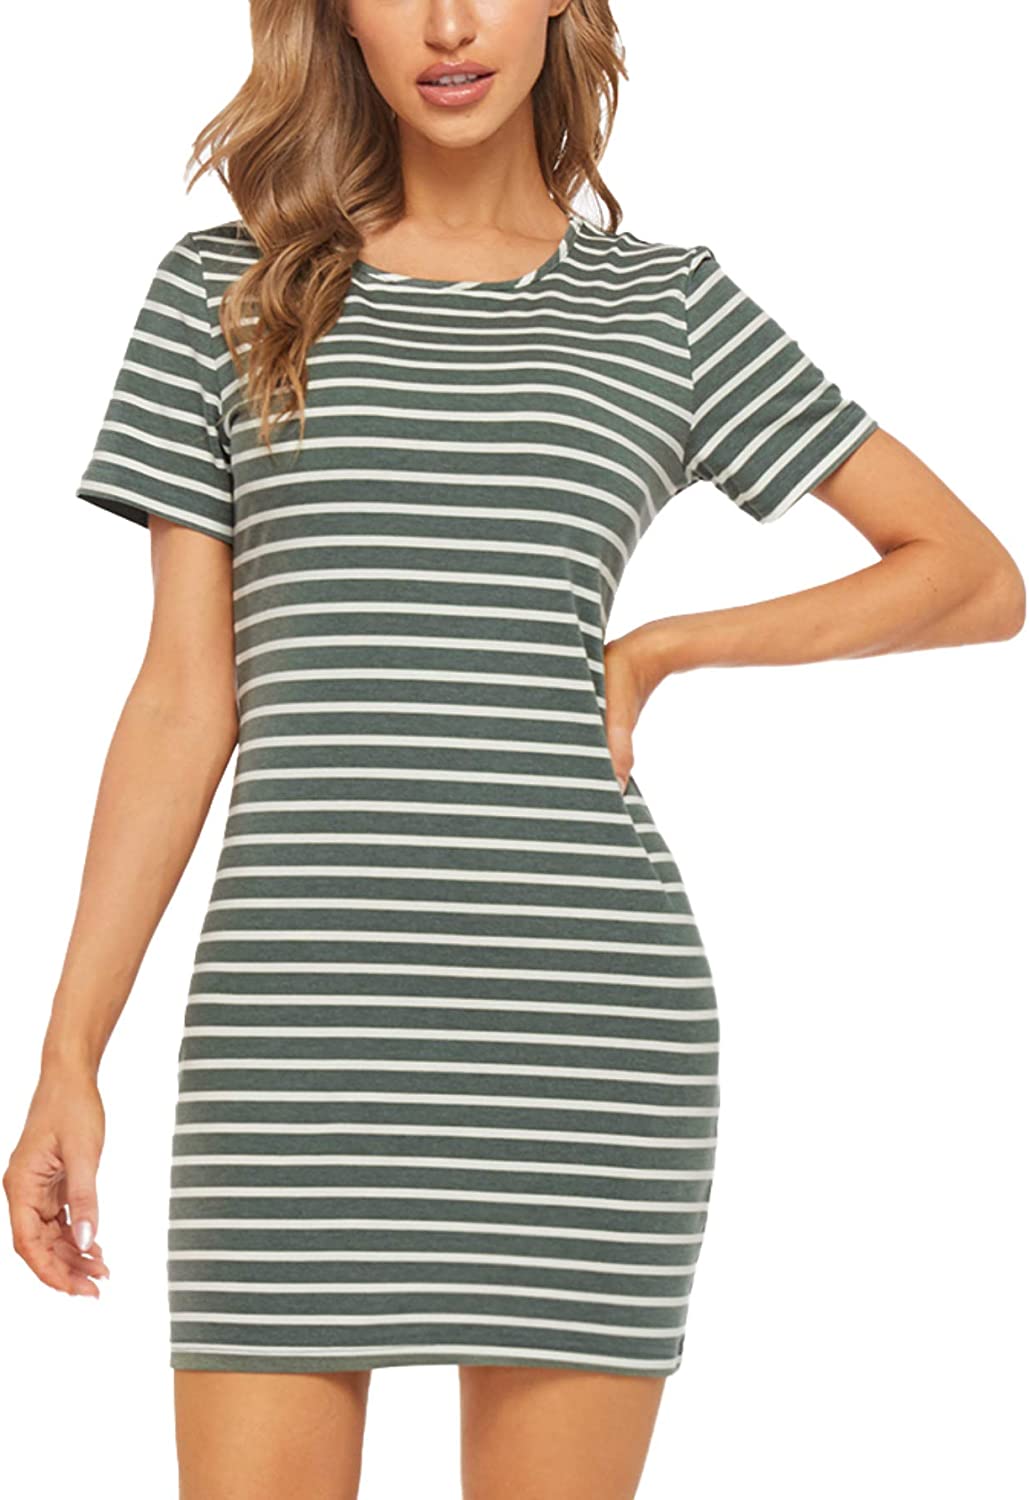 Women's Casual Short Sleeve Striped Bodycon T Shirt Short Mini Dress